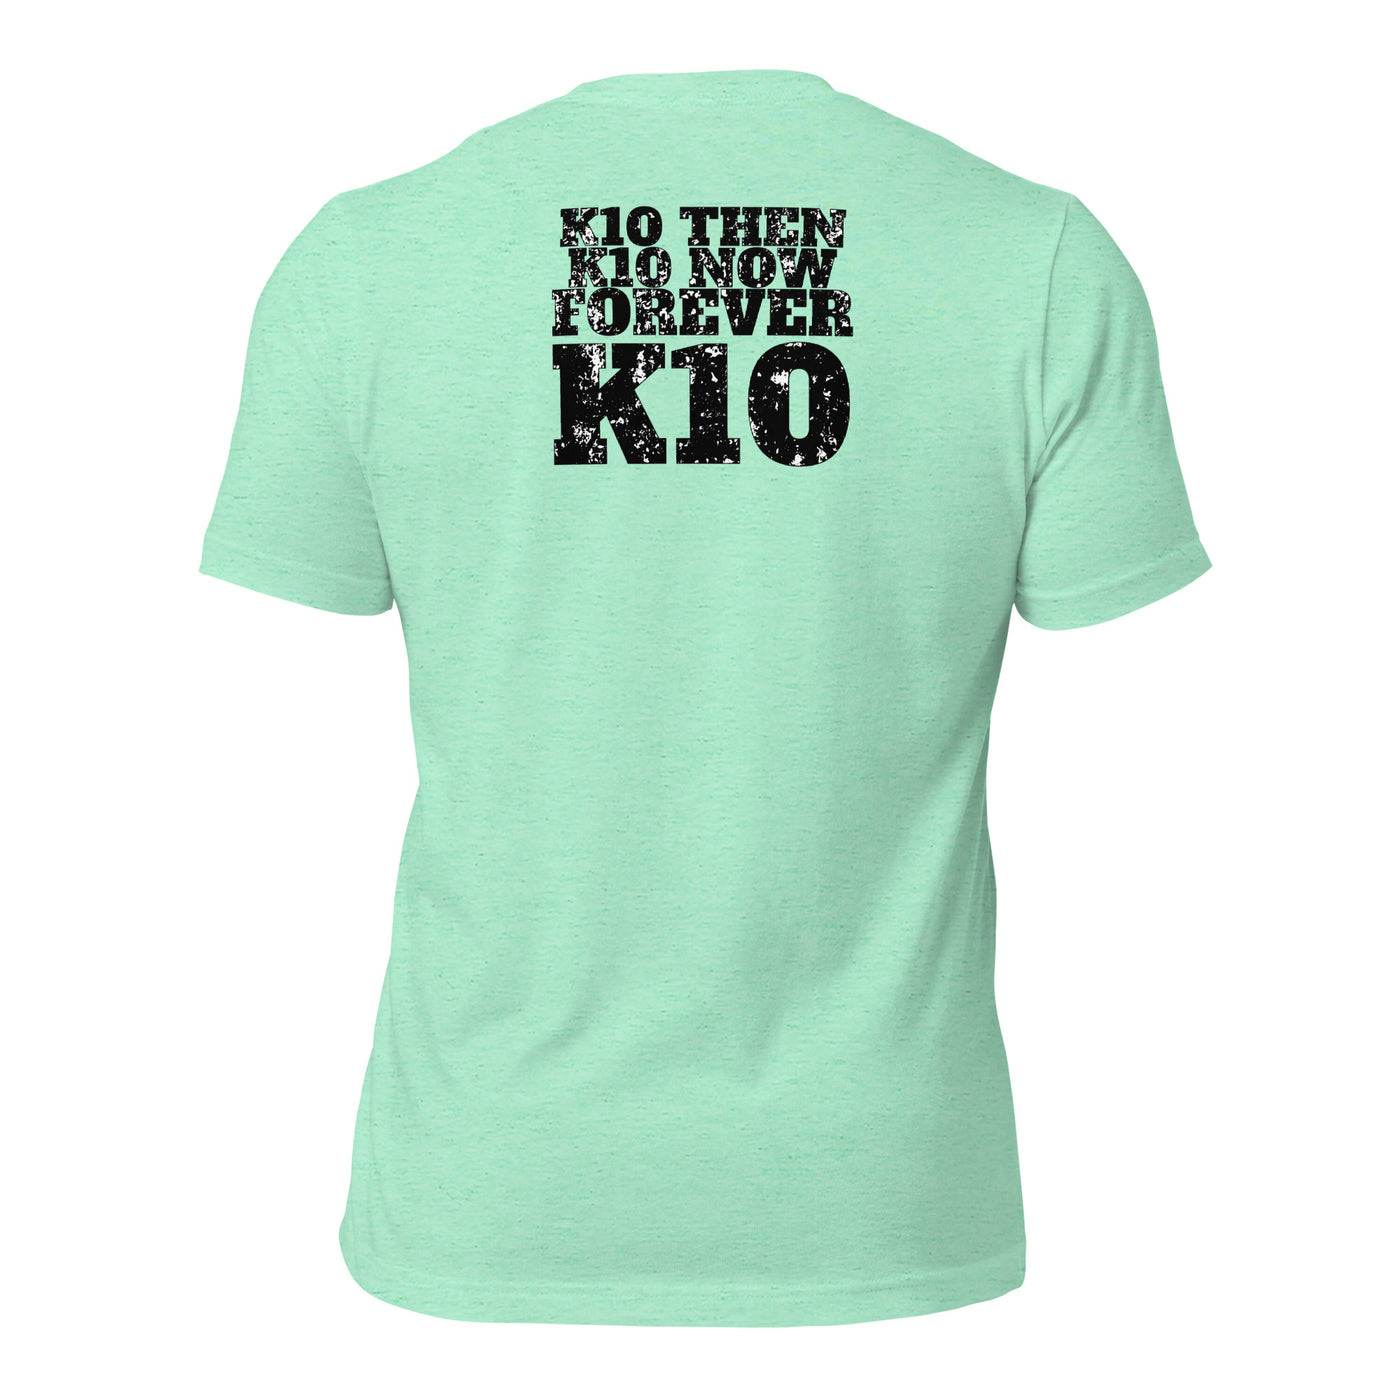 Forever K10 Unisex T-shirt (Back Print); Classic All-Inclusive T-Shirts, Diverse Unisex Shirt Selection, T-shirt, Short sleeves Shirt